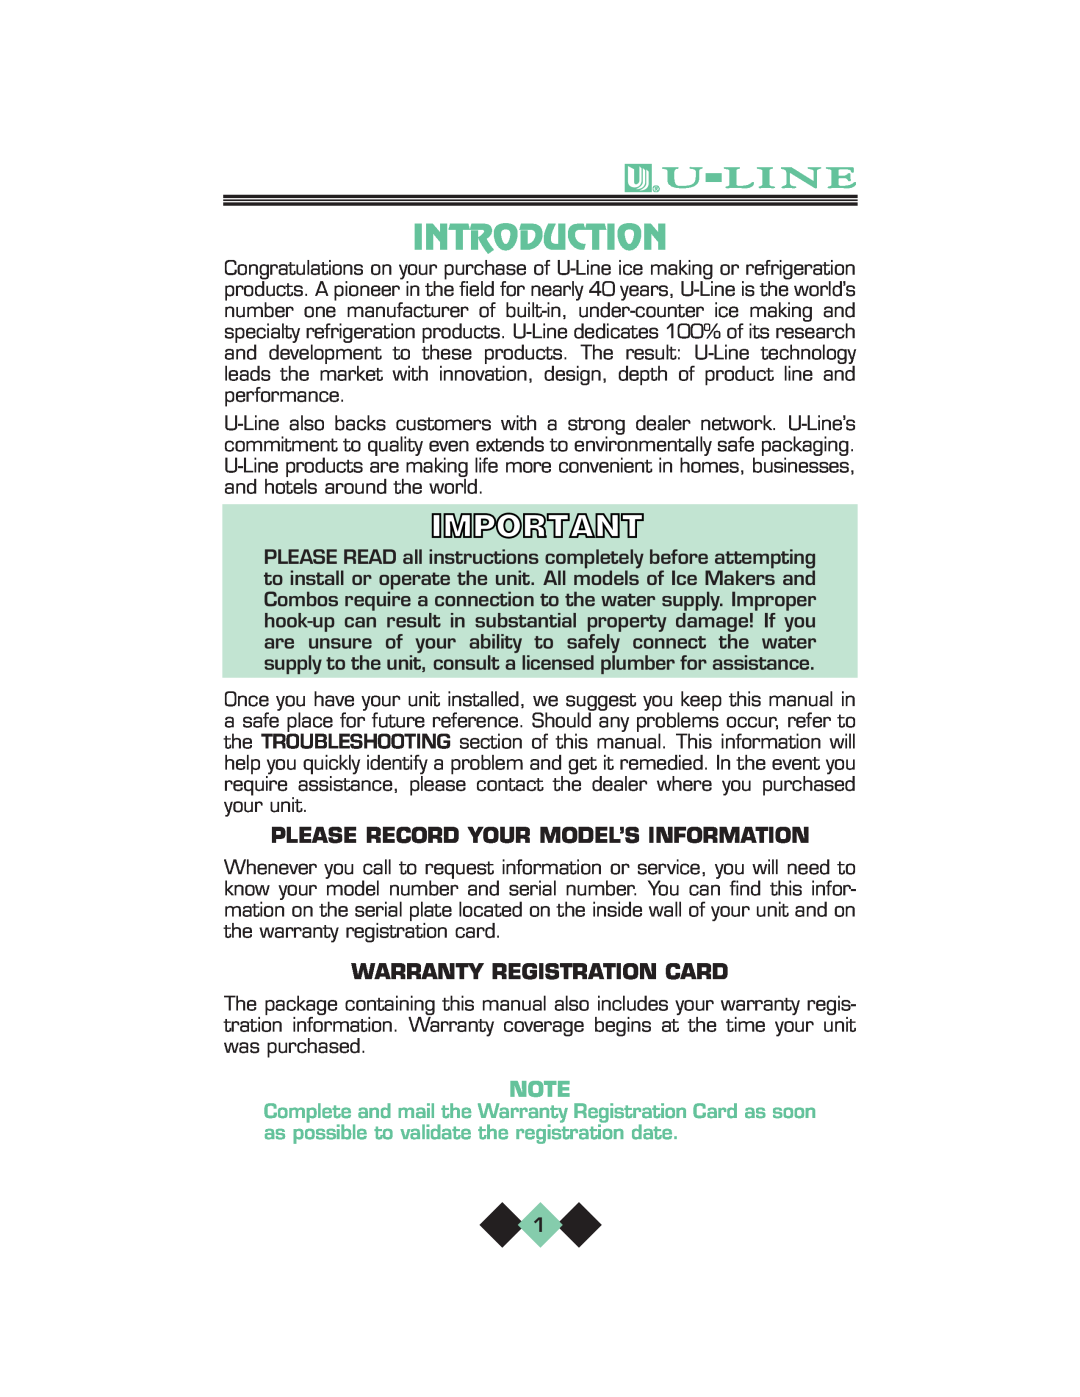 U-Line pmn manual Introduction, Please Record Your Model’S Information, Warranty Registration Card 